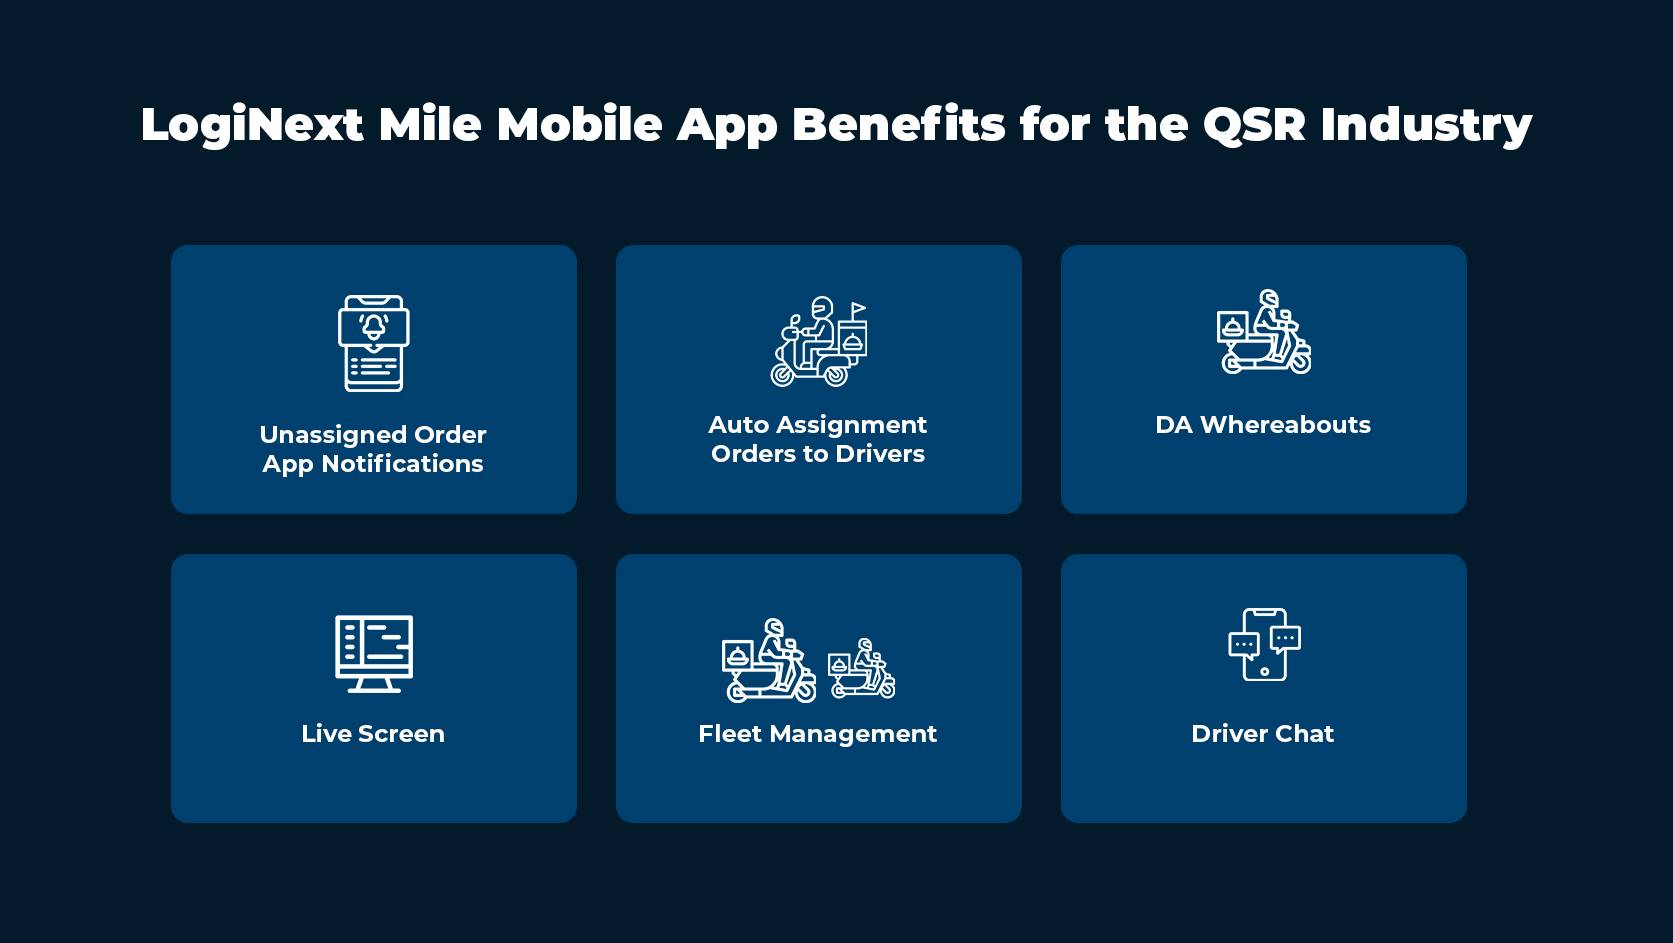 Prednosti mobilne aplikacije LogiNext Mile za QSR podjetja